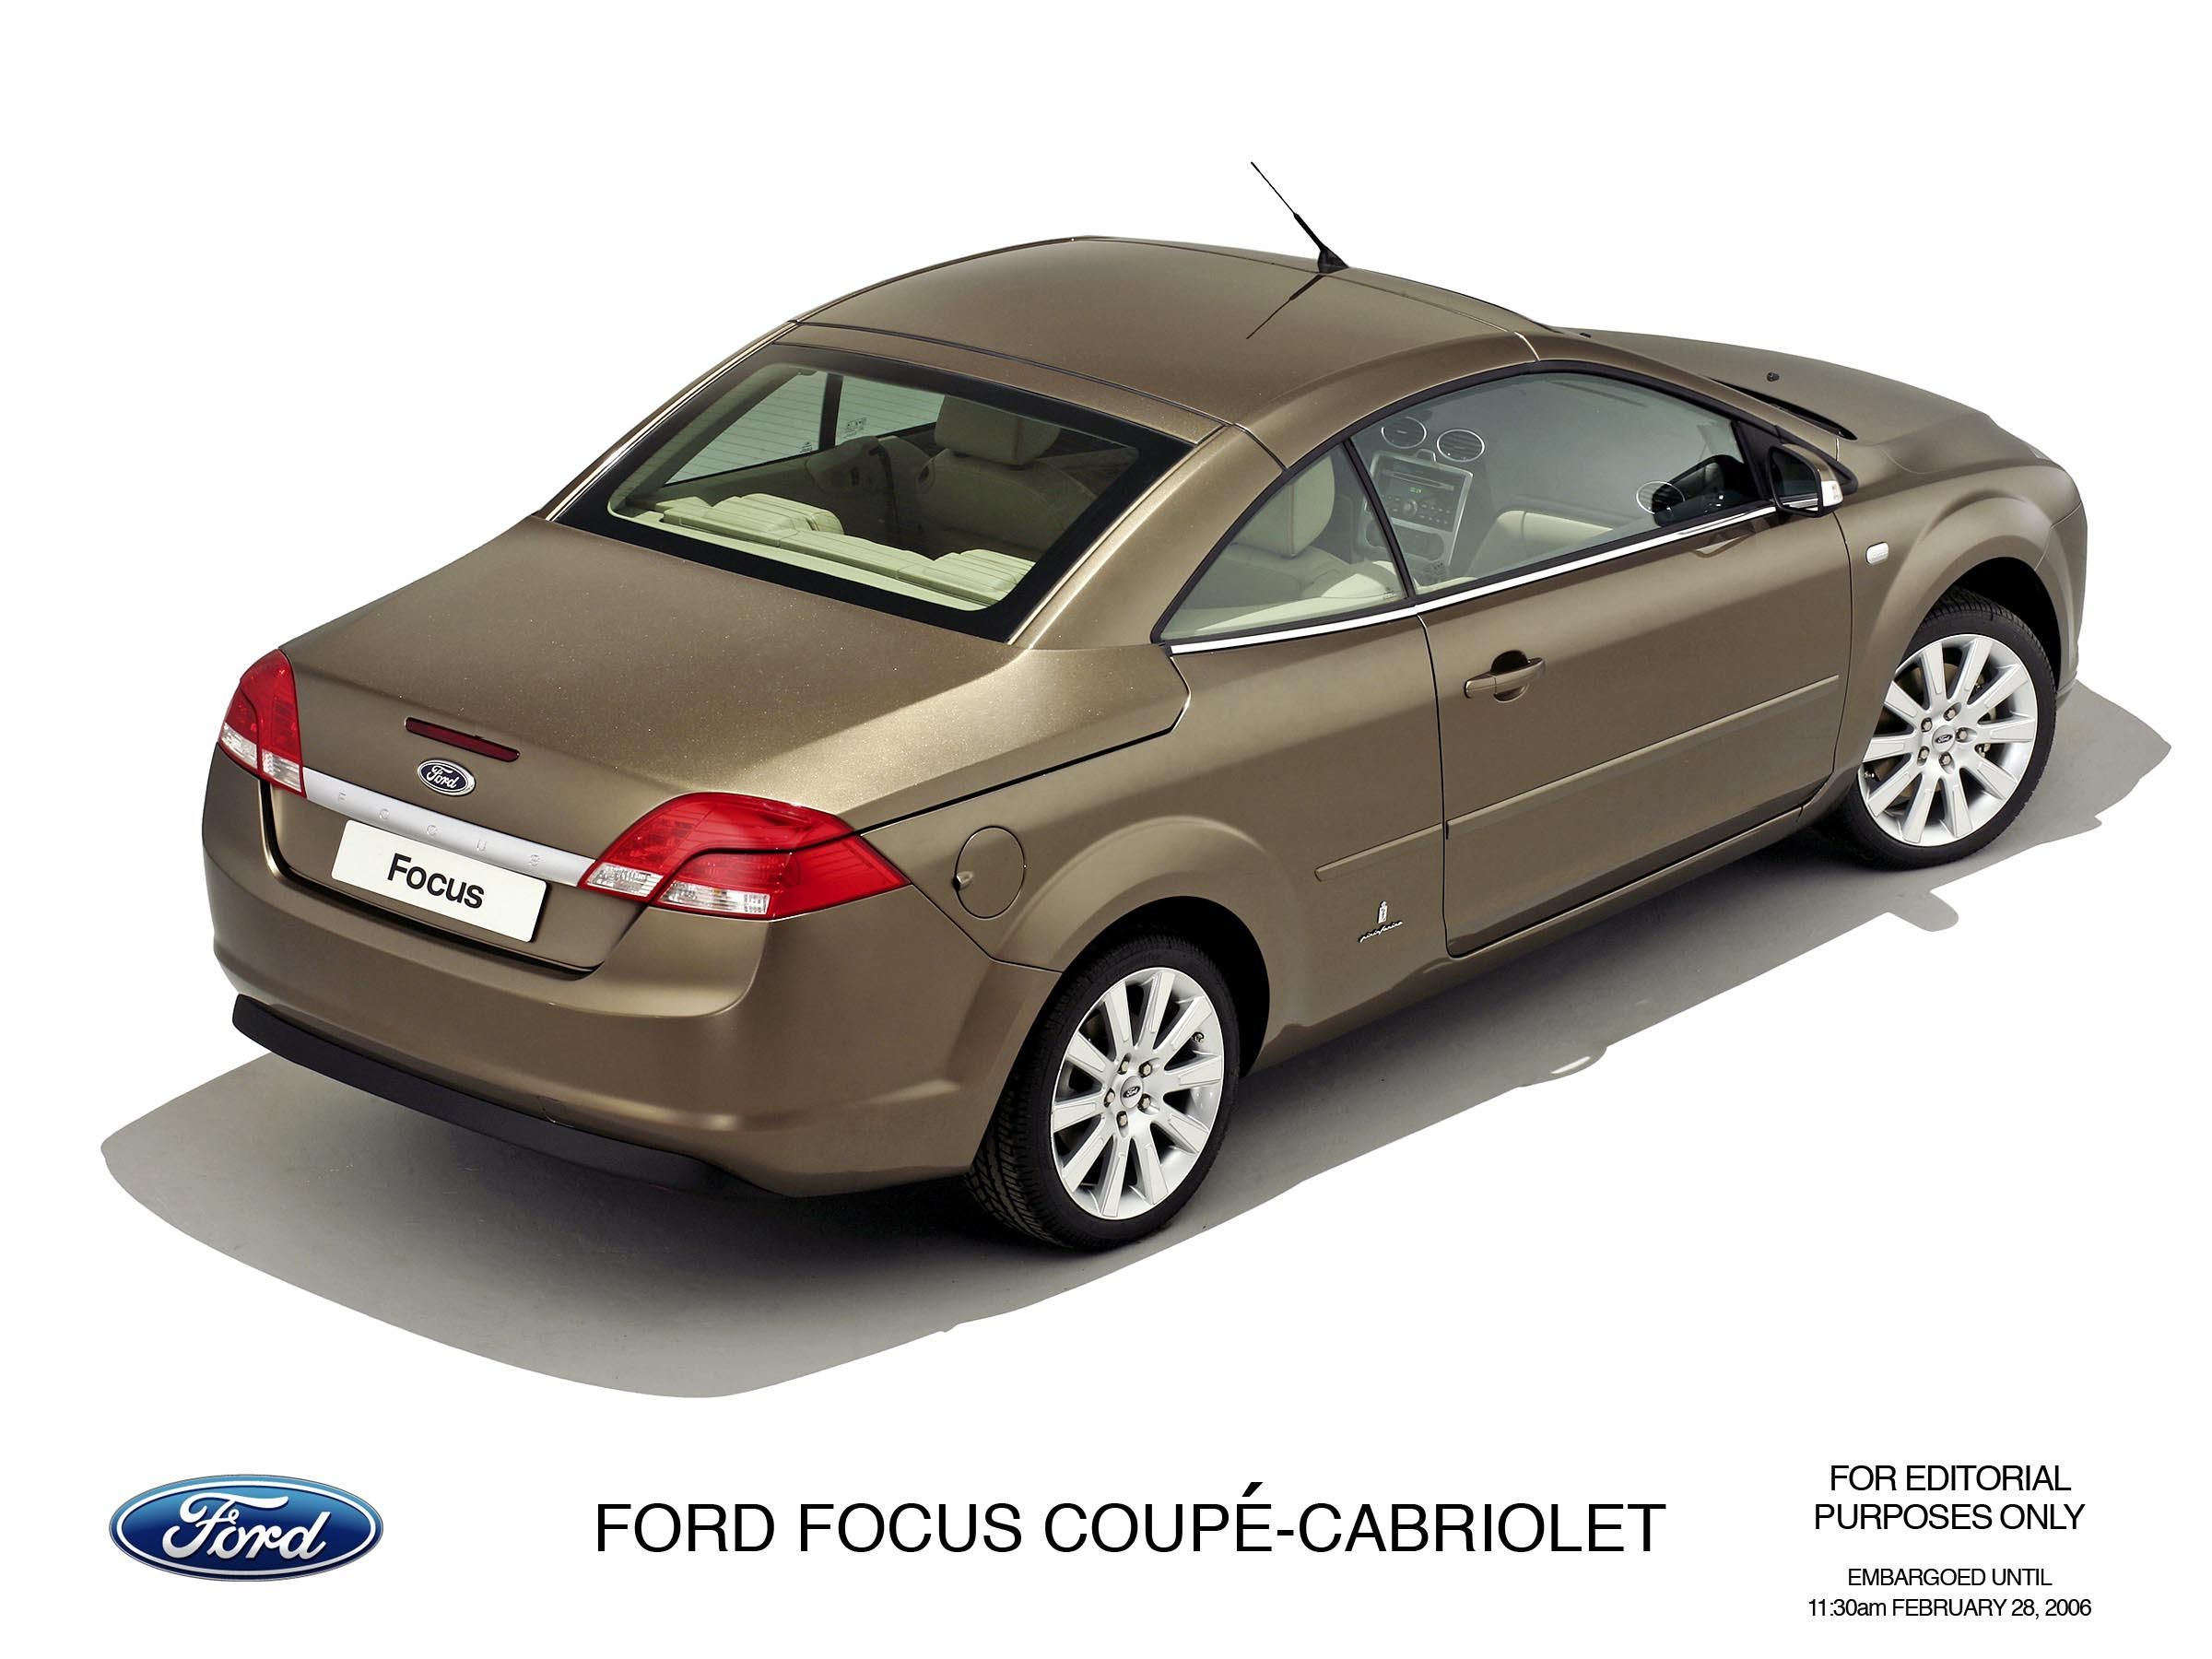 2007 Ford Focus